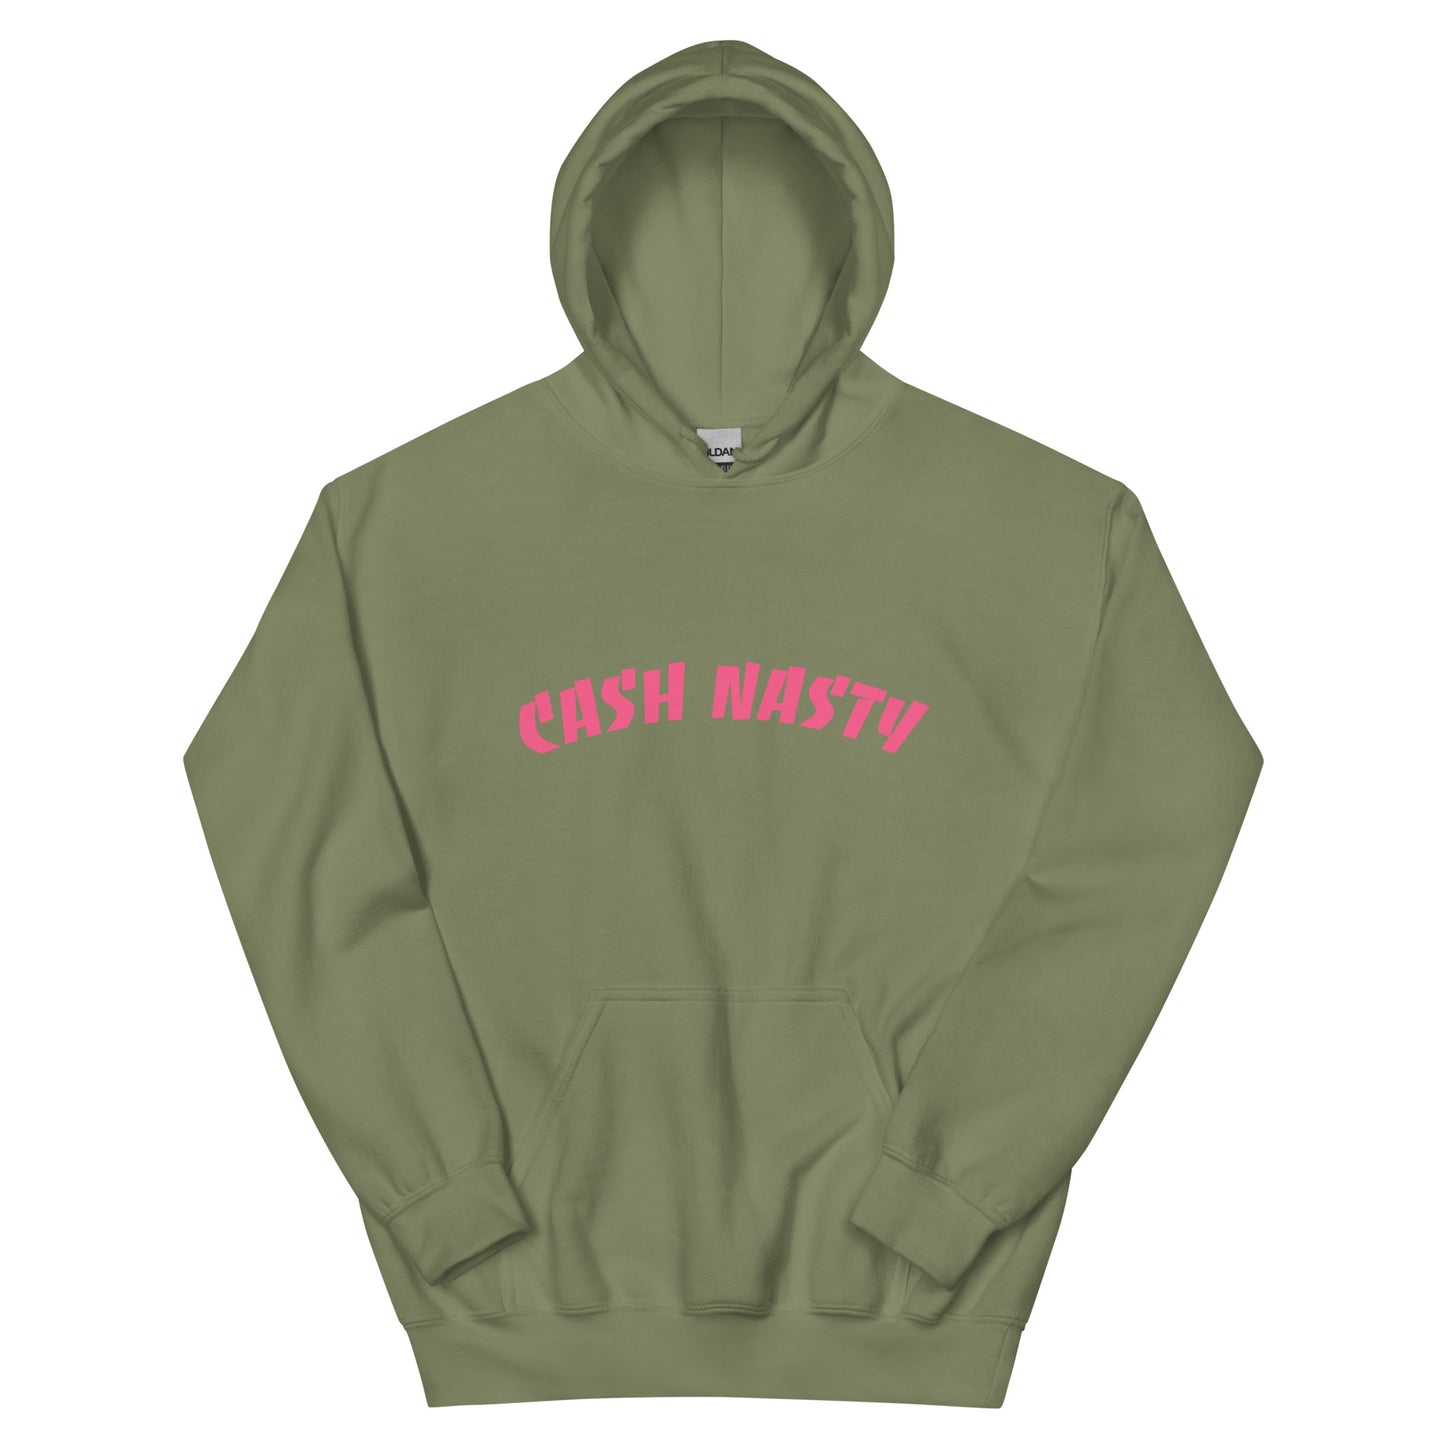 Cash Nasty Hoodie